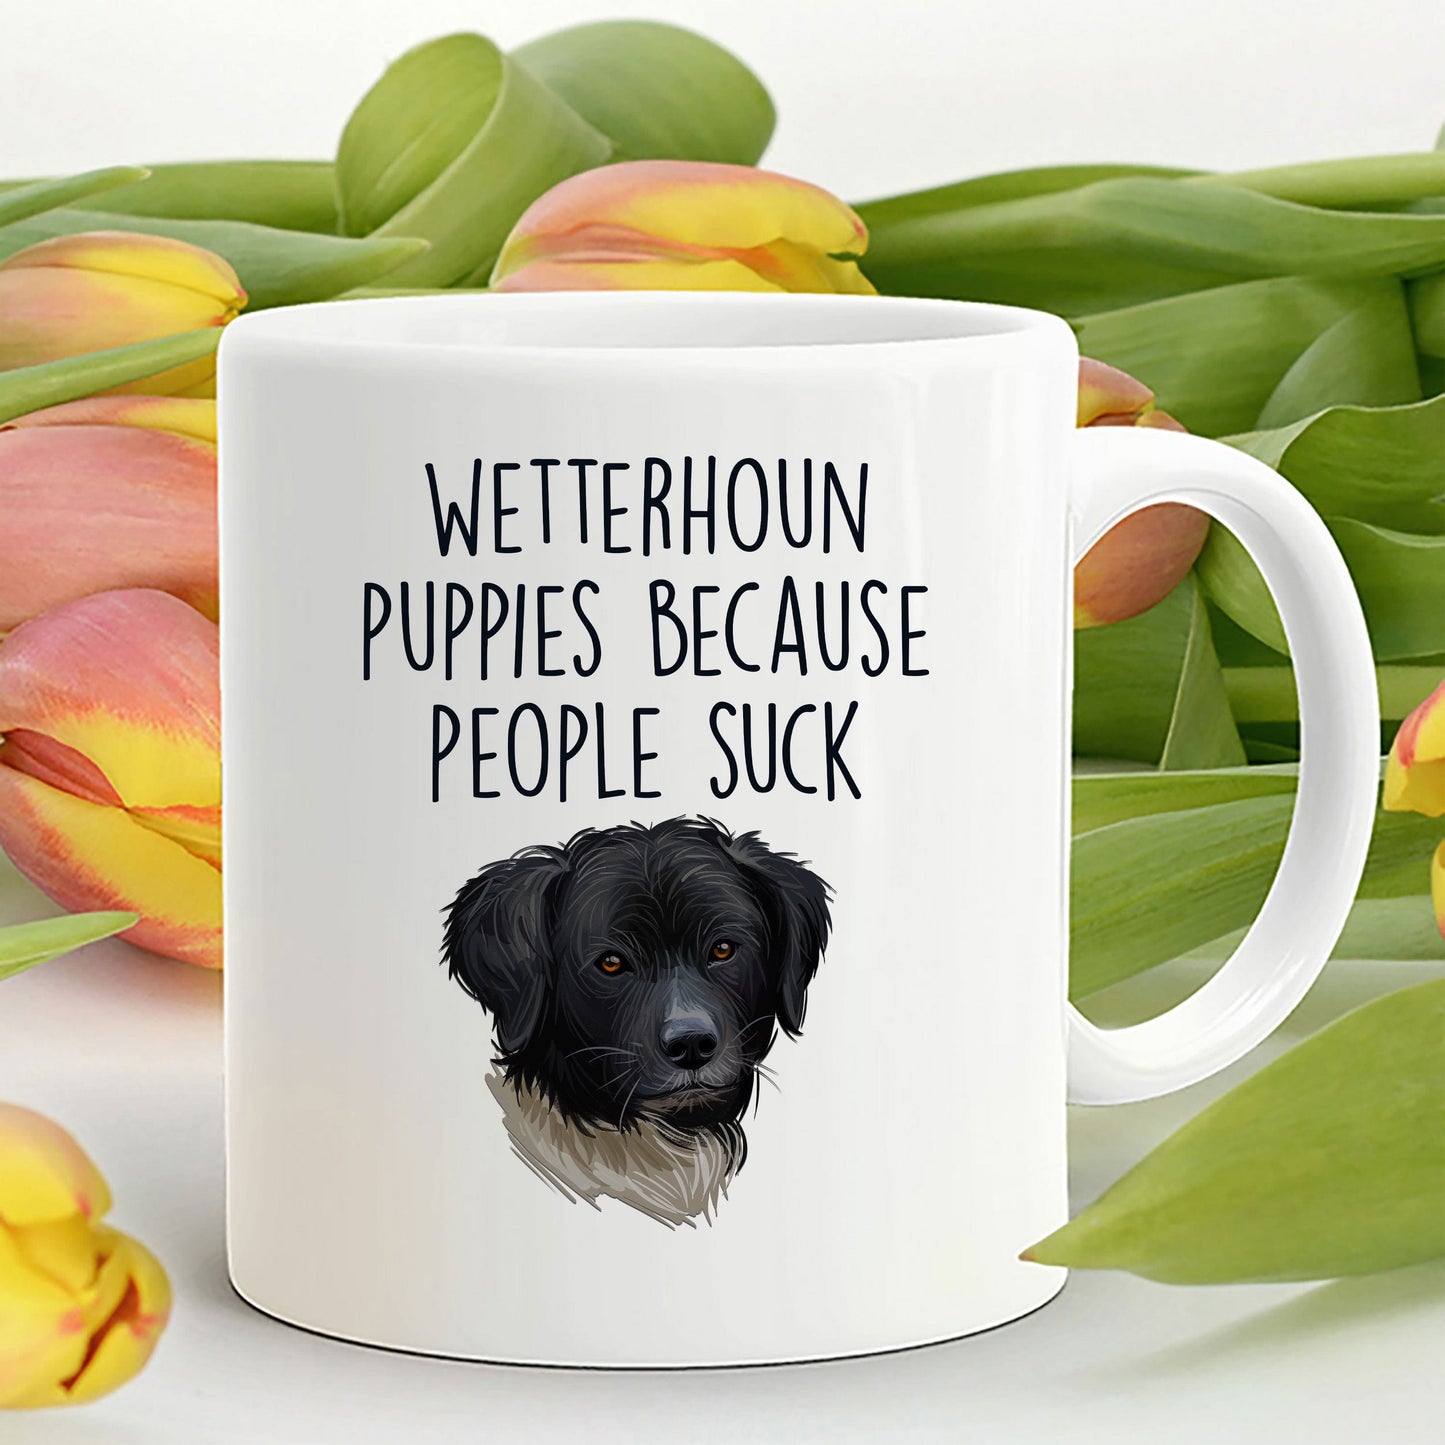 Wetterhoun Puppies Because People Suck Funny Dog Ceramic Coffee Mug